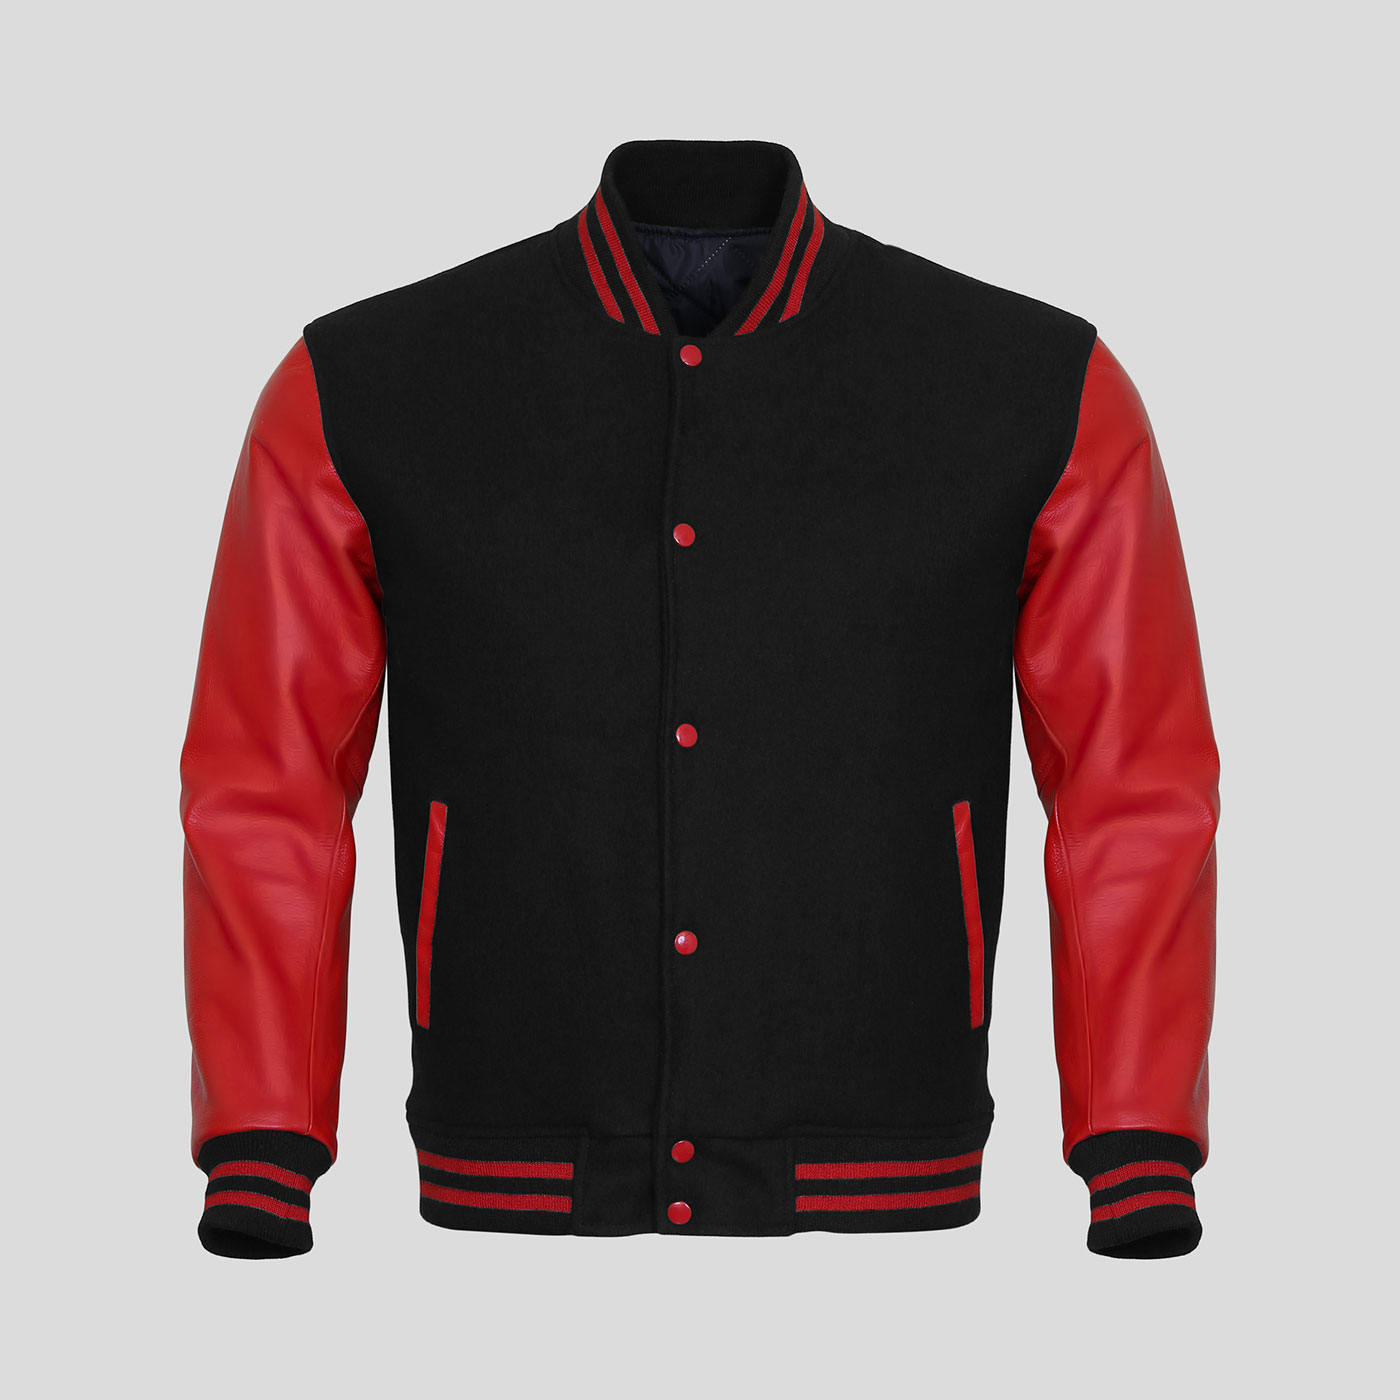 Varsity Jacket - Baseball Jacket Herrenmode SCARLET RED Leather Sleeves Gen...